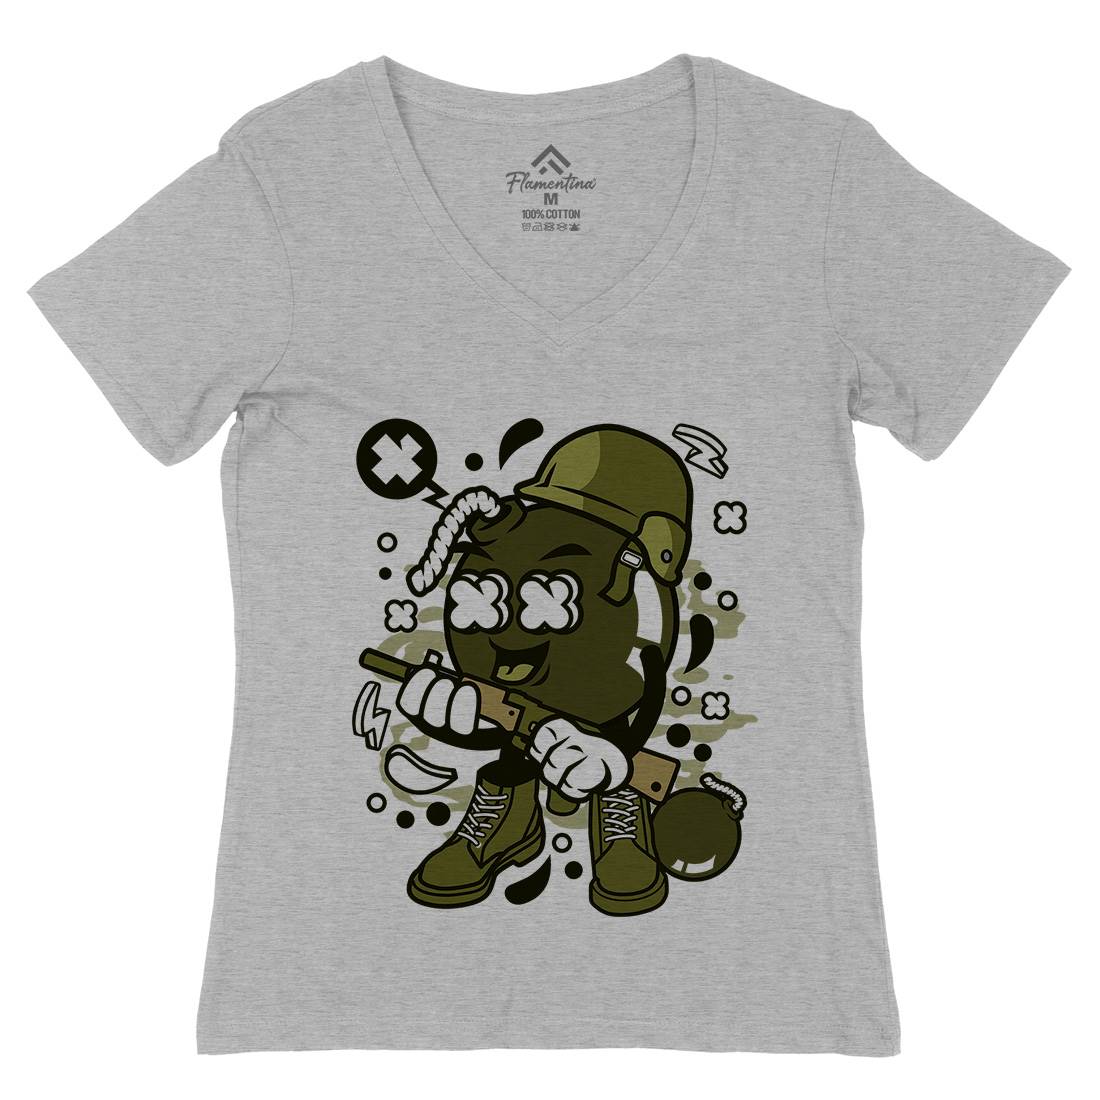 Soldier Bomb Womens Organic V-Neck T-Shirt Army C252